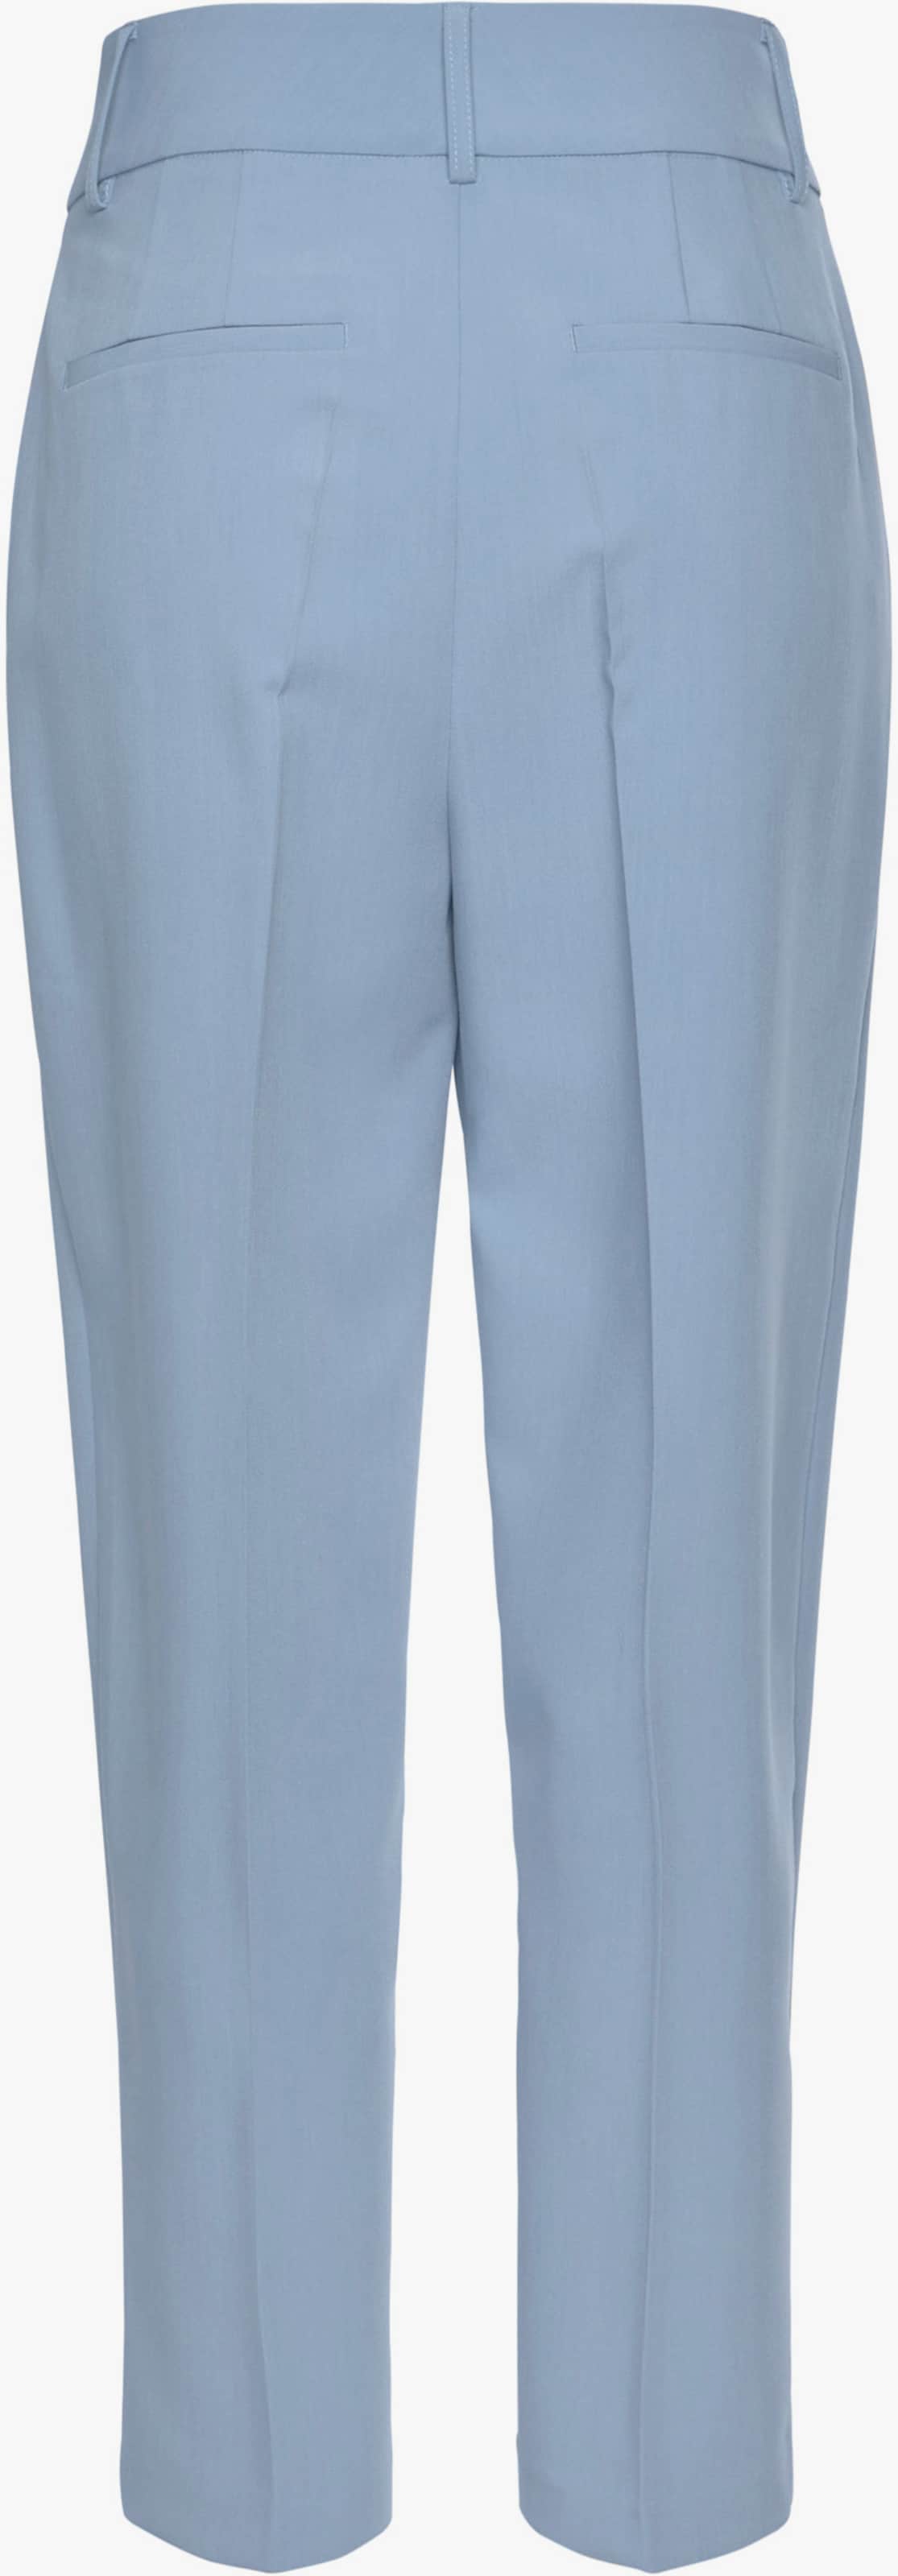 LASCANA Pantalon tailleur - bleu clair